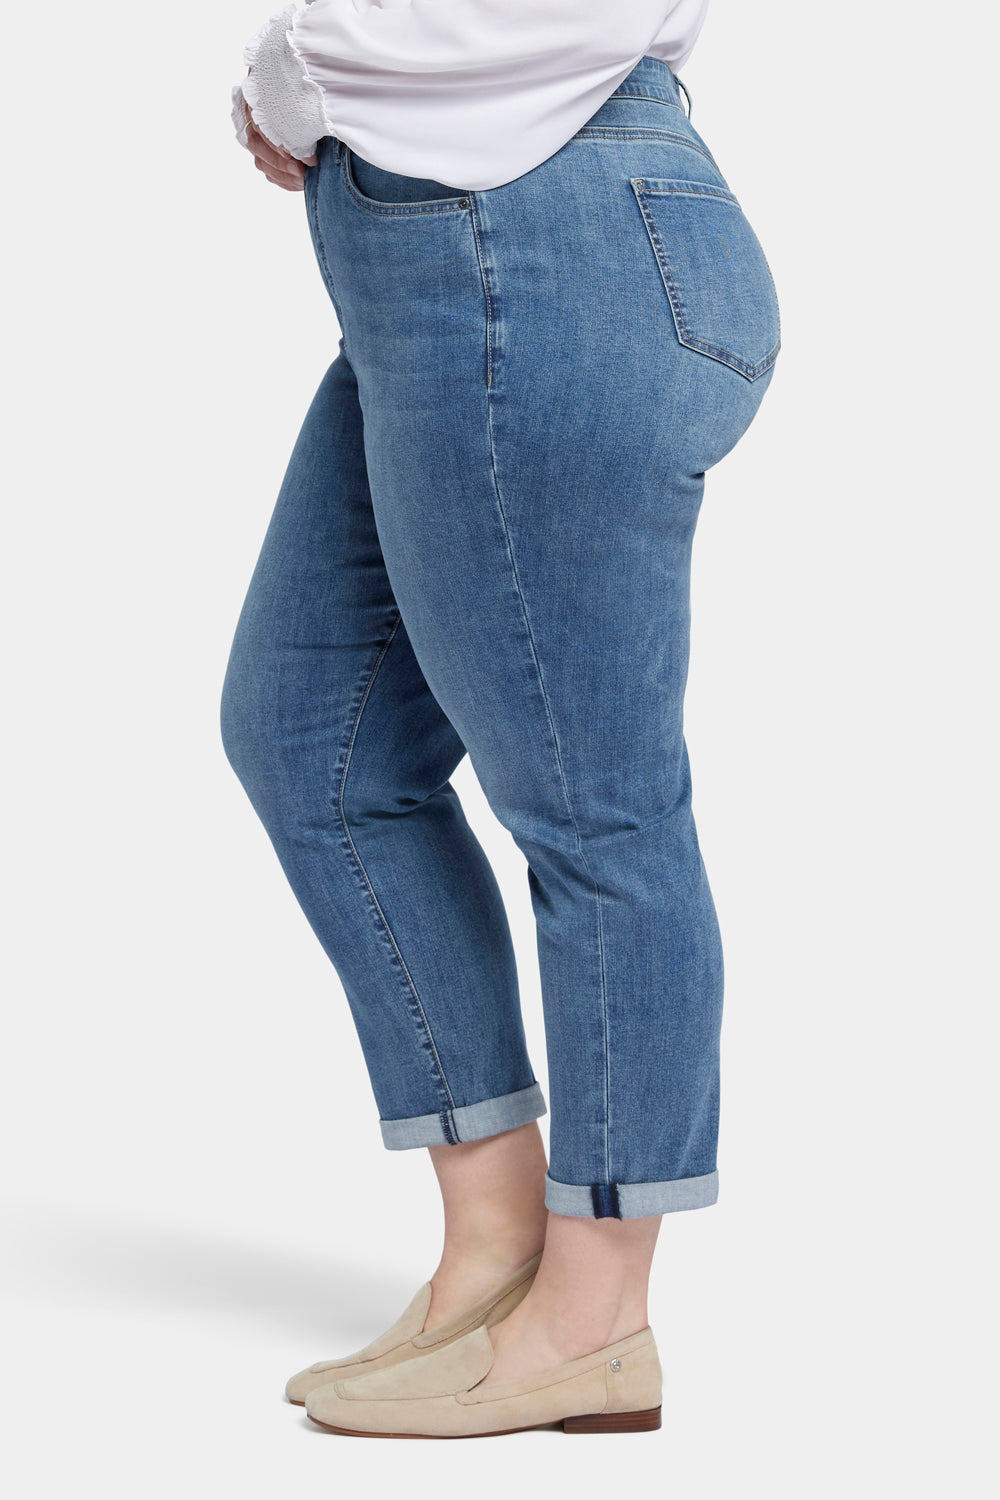 NYDJ Margot Girlfriend Jeans In Petite Plus Size In Cool Embrace® Denim With Cuffs - Rockie